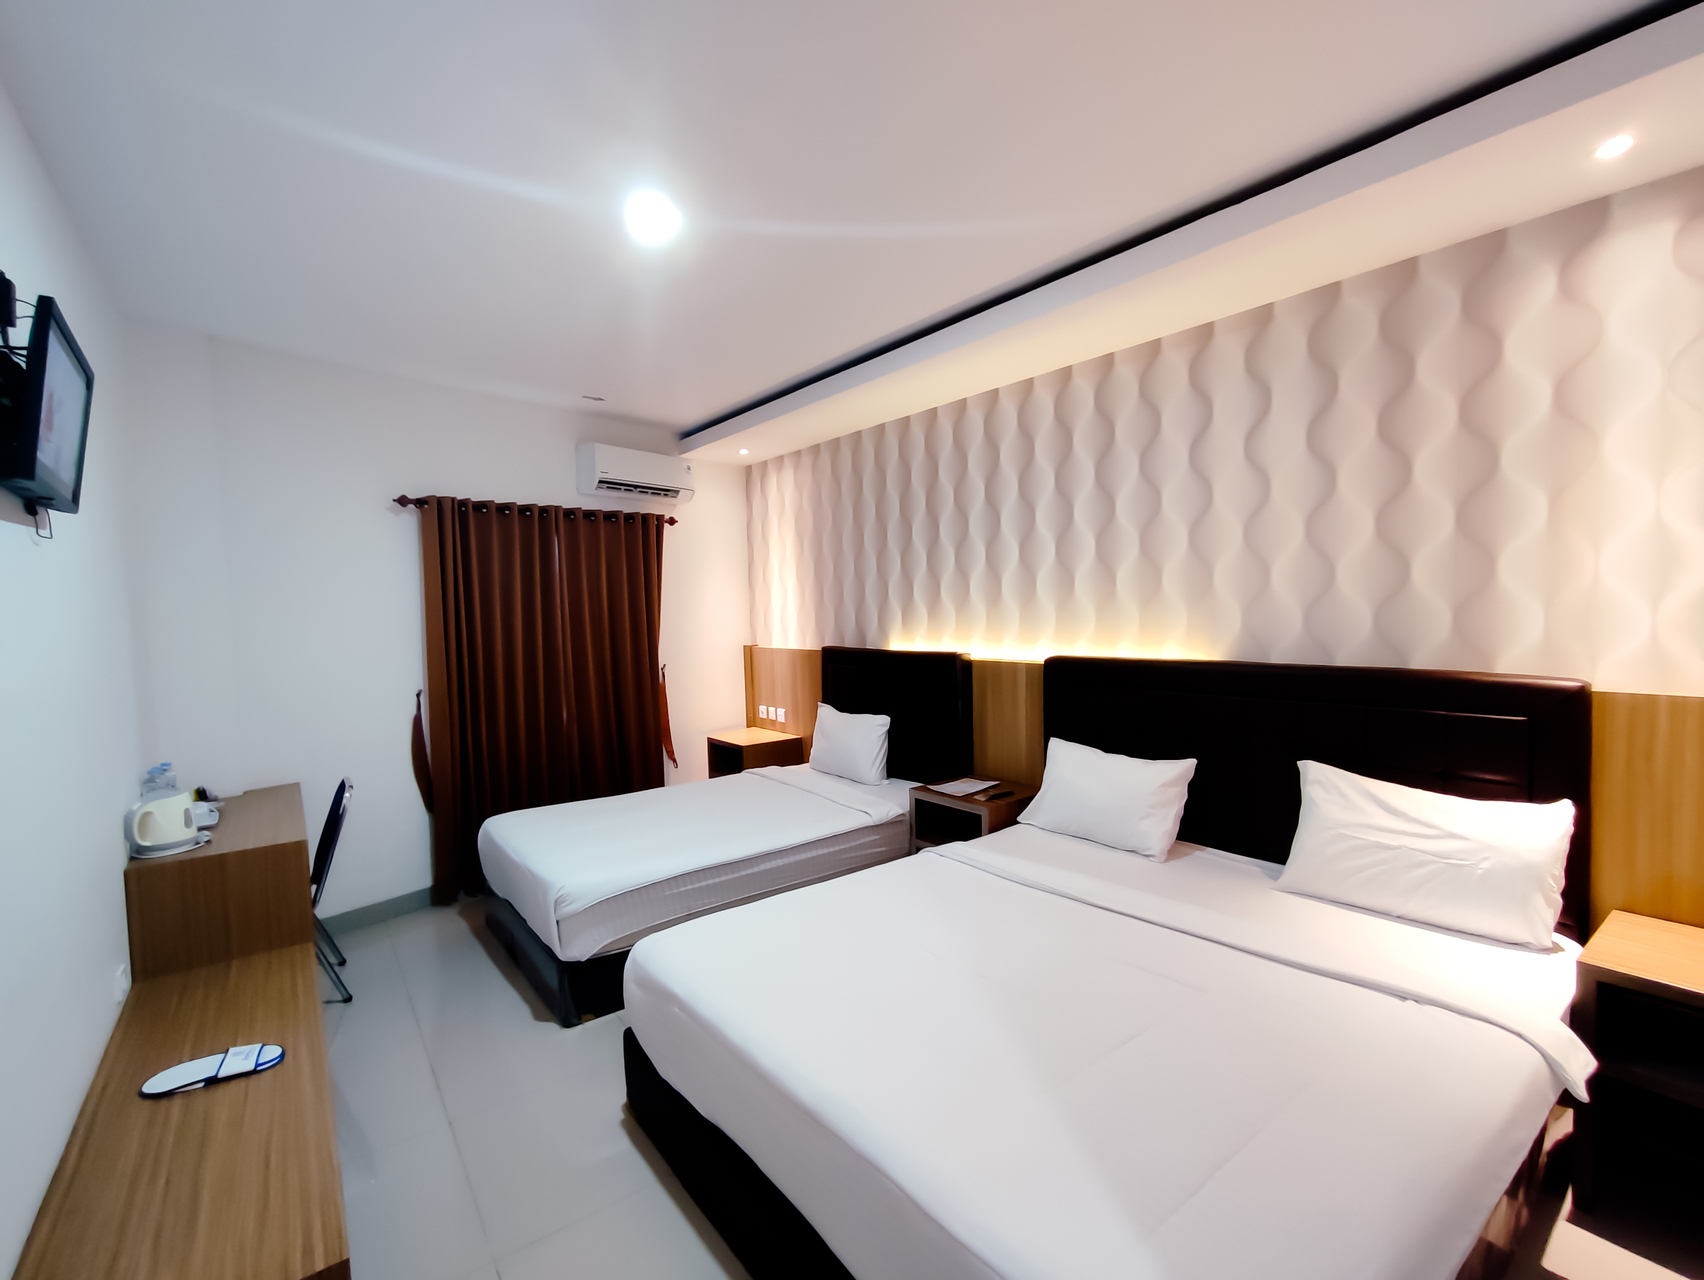 Bedroom 4, Arya Hotel Syariah Majalengka, Majalengka